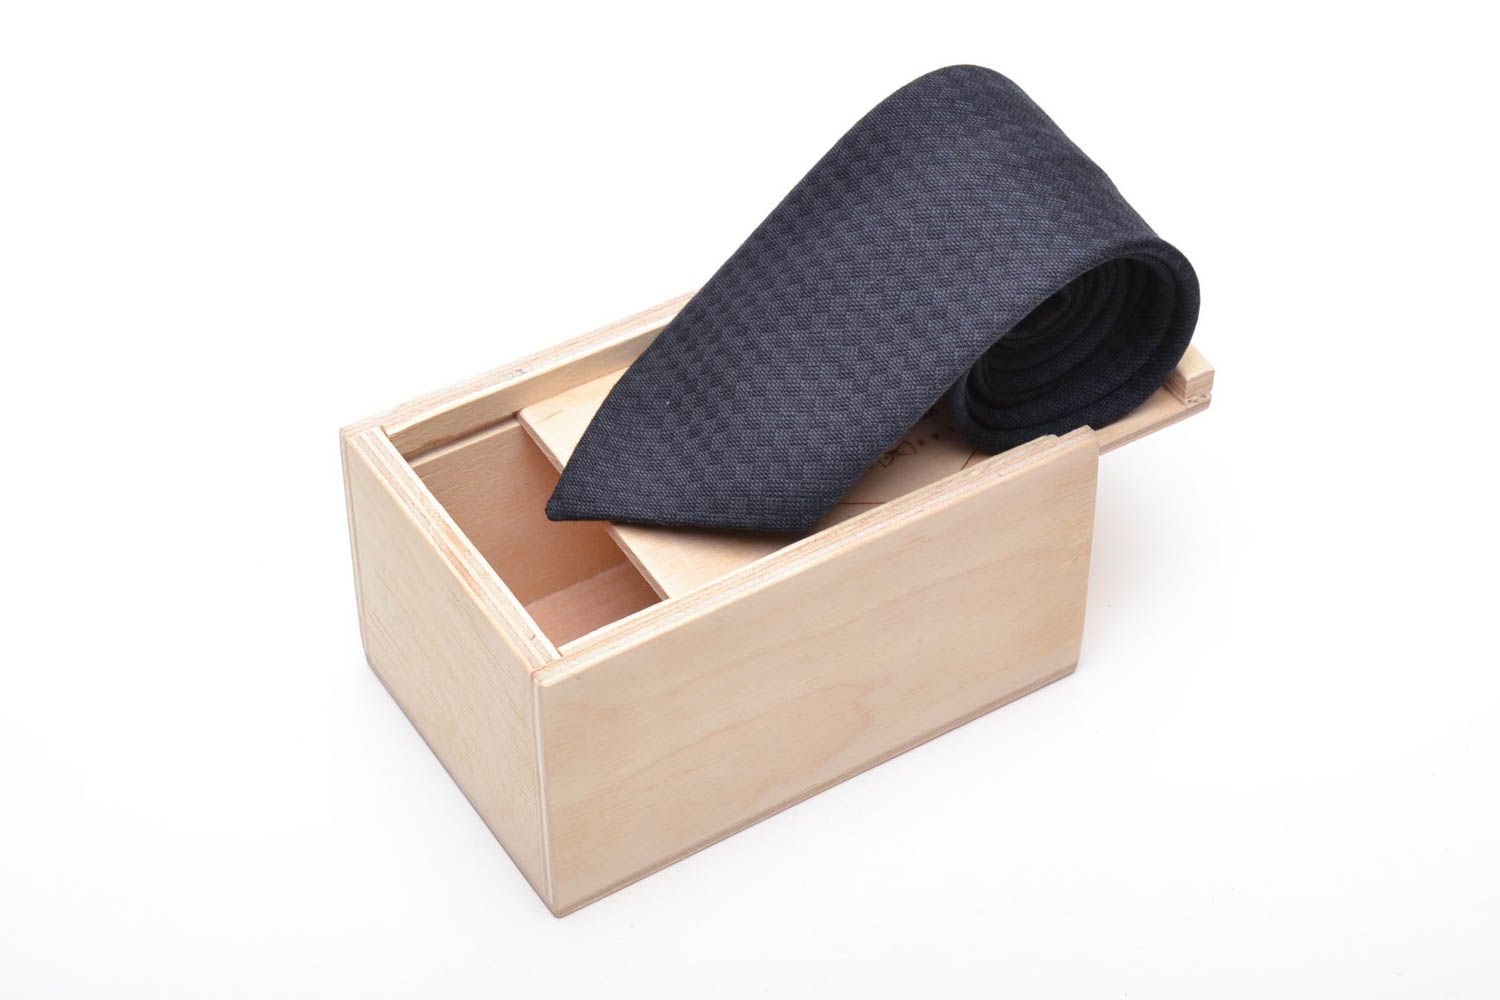 Cravate noire en tissu faite main photo 3